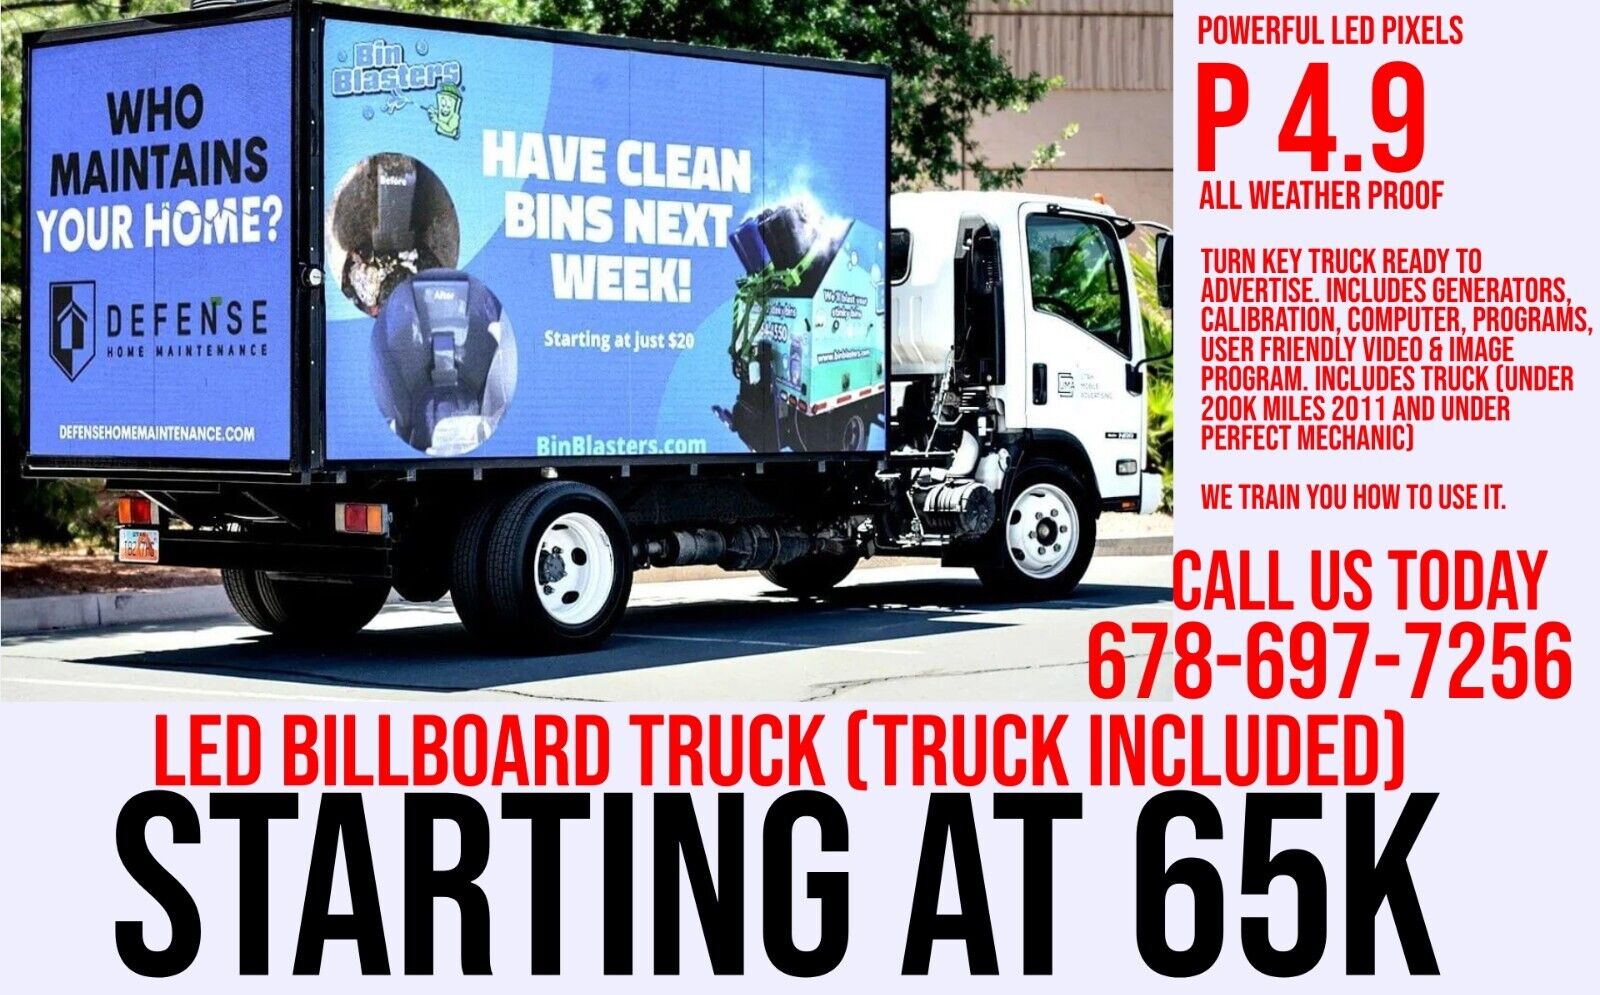 Led billboard Truck P5 All Weather Proof Turn Key Digital Advertising Truck